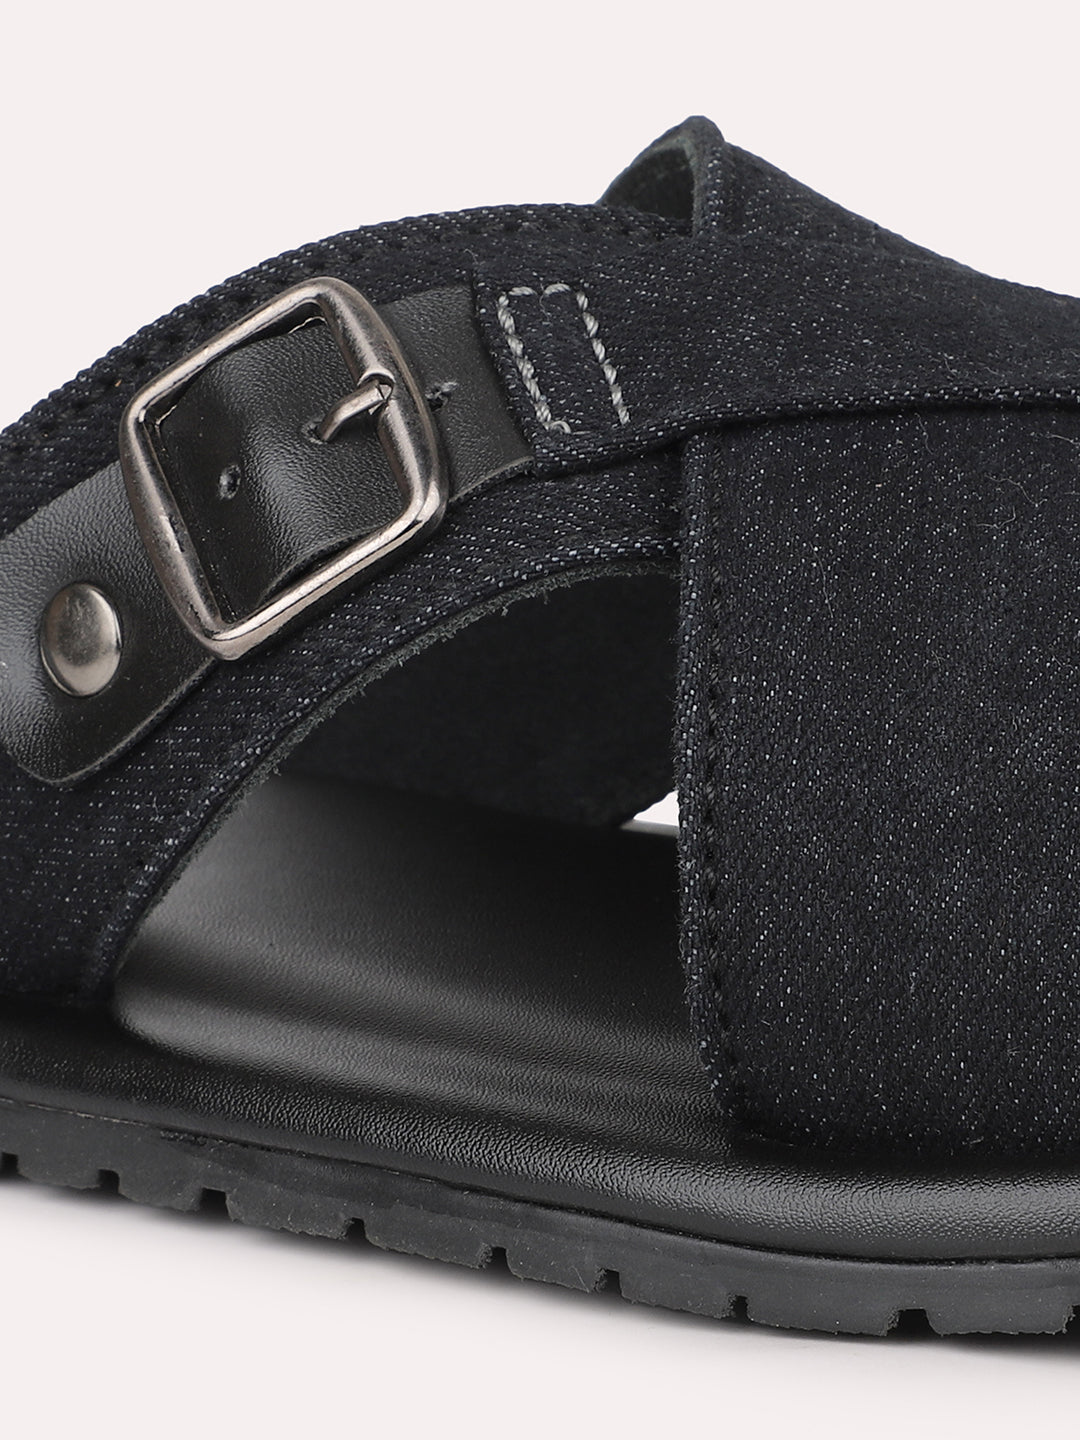 Privo Denim Black Casual Sandal With Buckle For Men